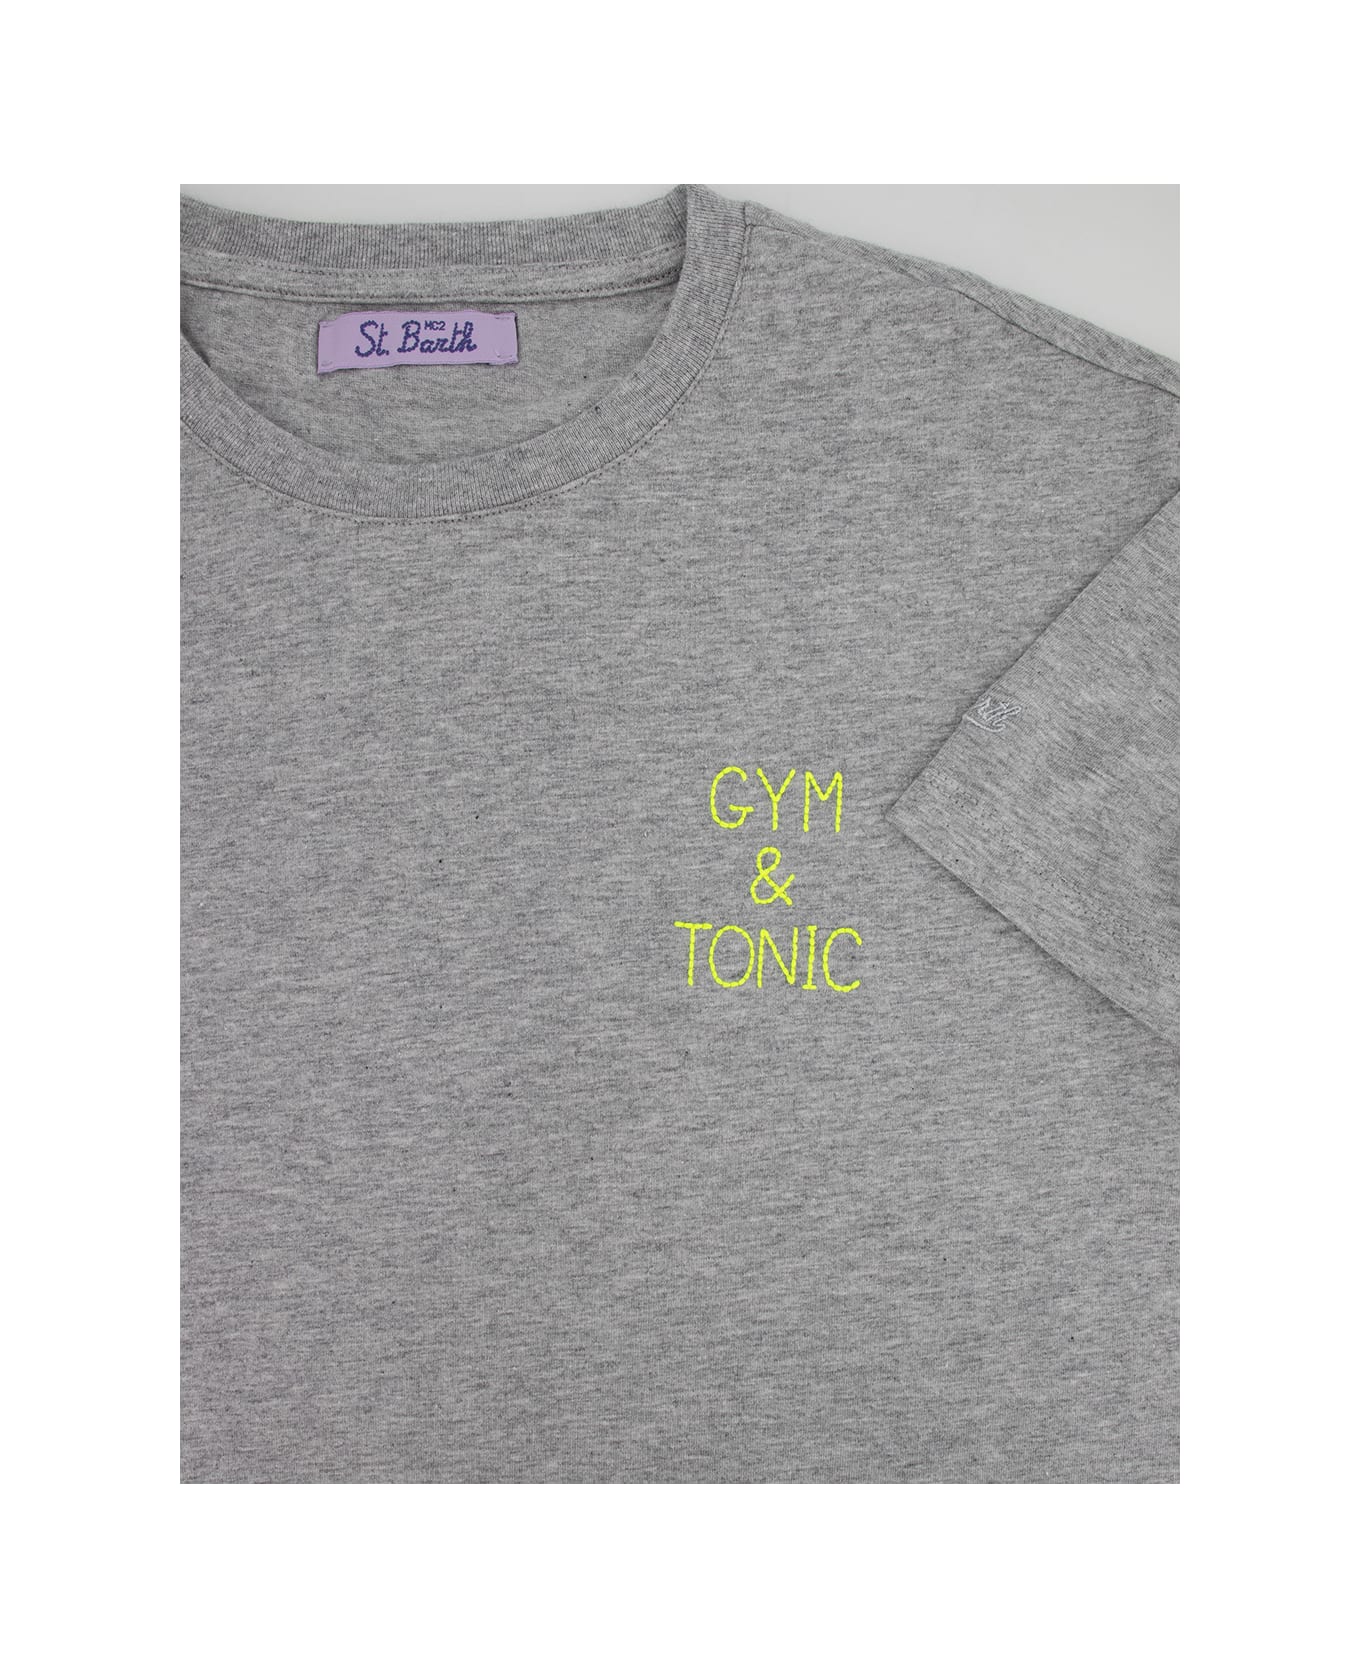 MC2 Saint Barth T-shirt - GYM AND TONIC 15M EMB